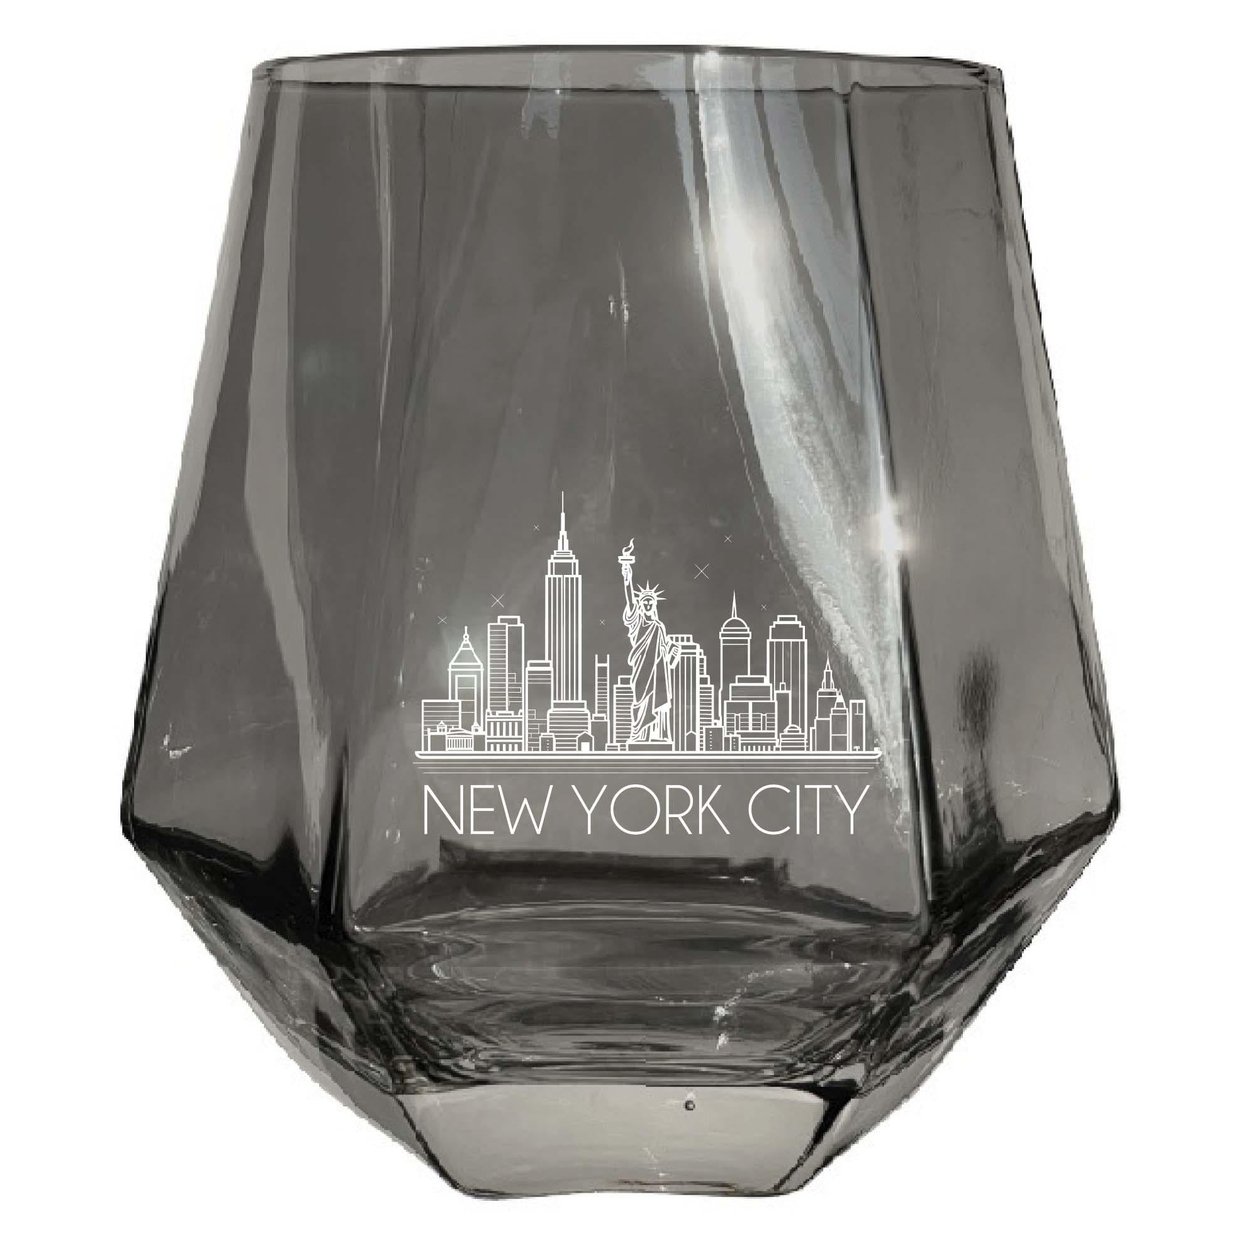 New York City Souvenir Wine Glass EngravedDiamond 15 Oz - Gray,,Single Unit